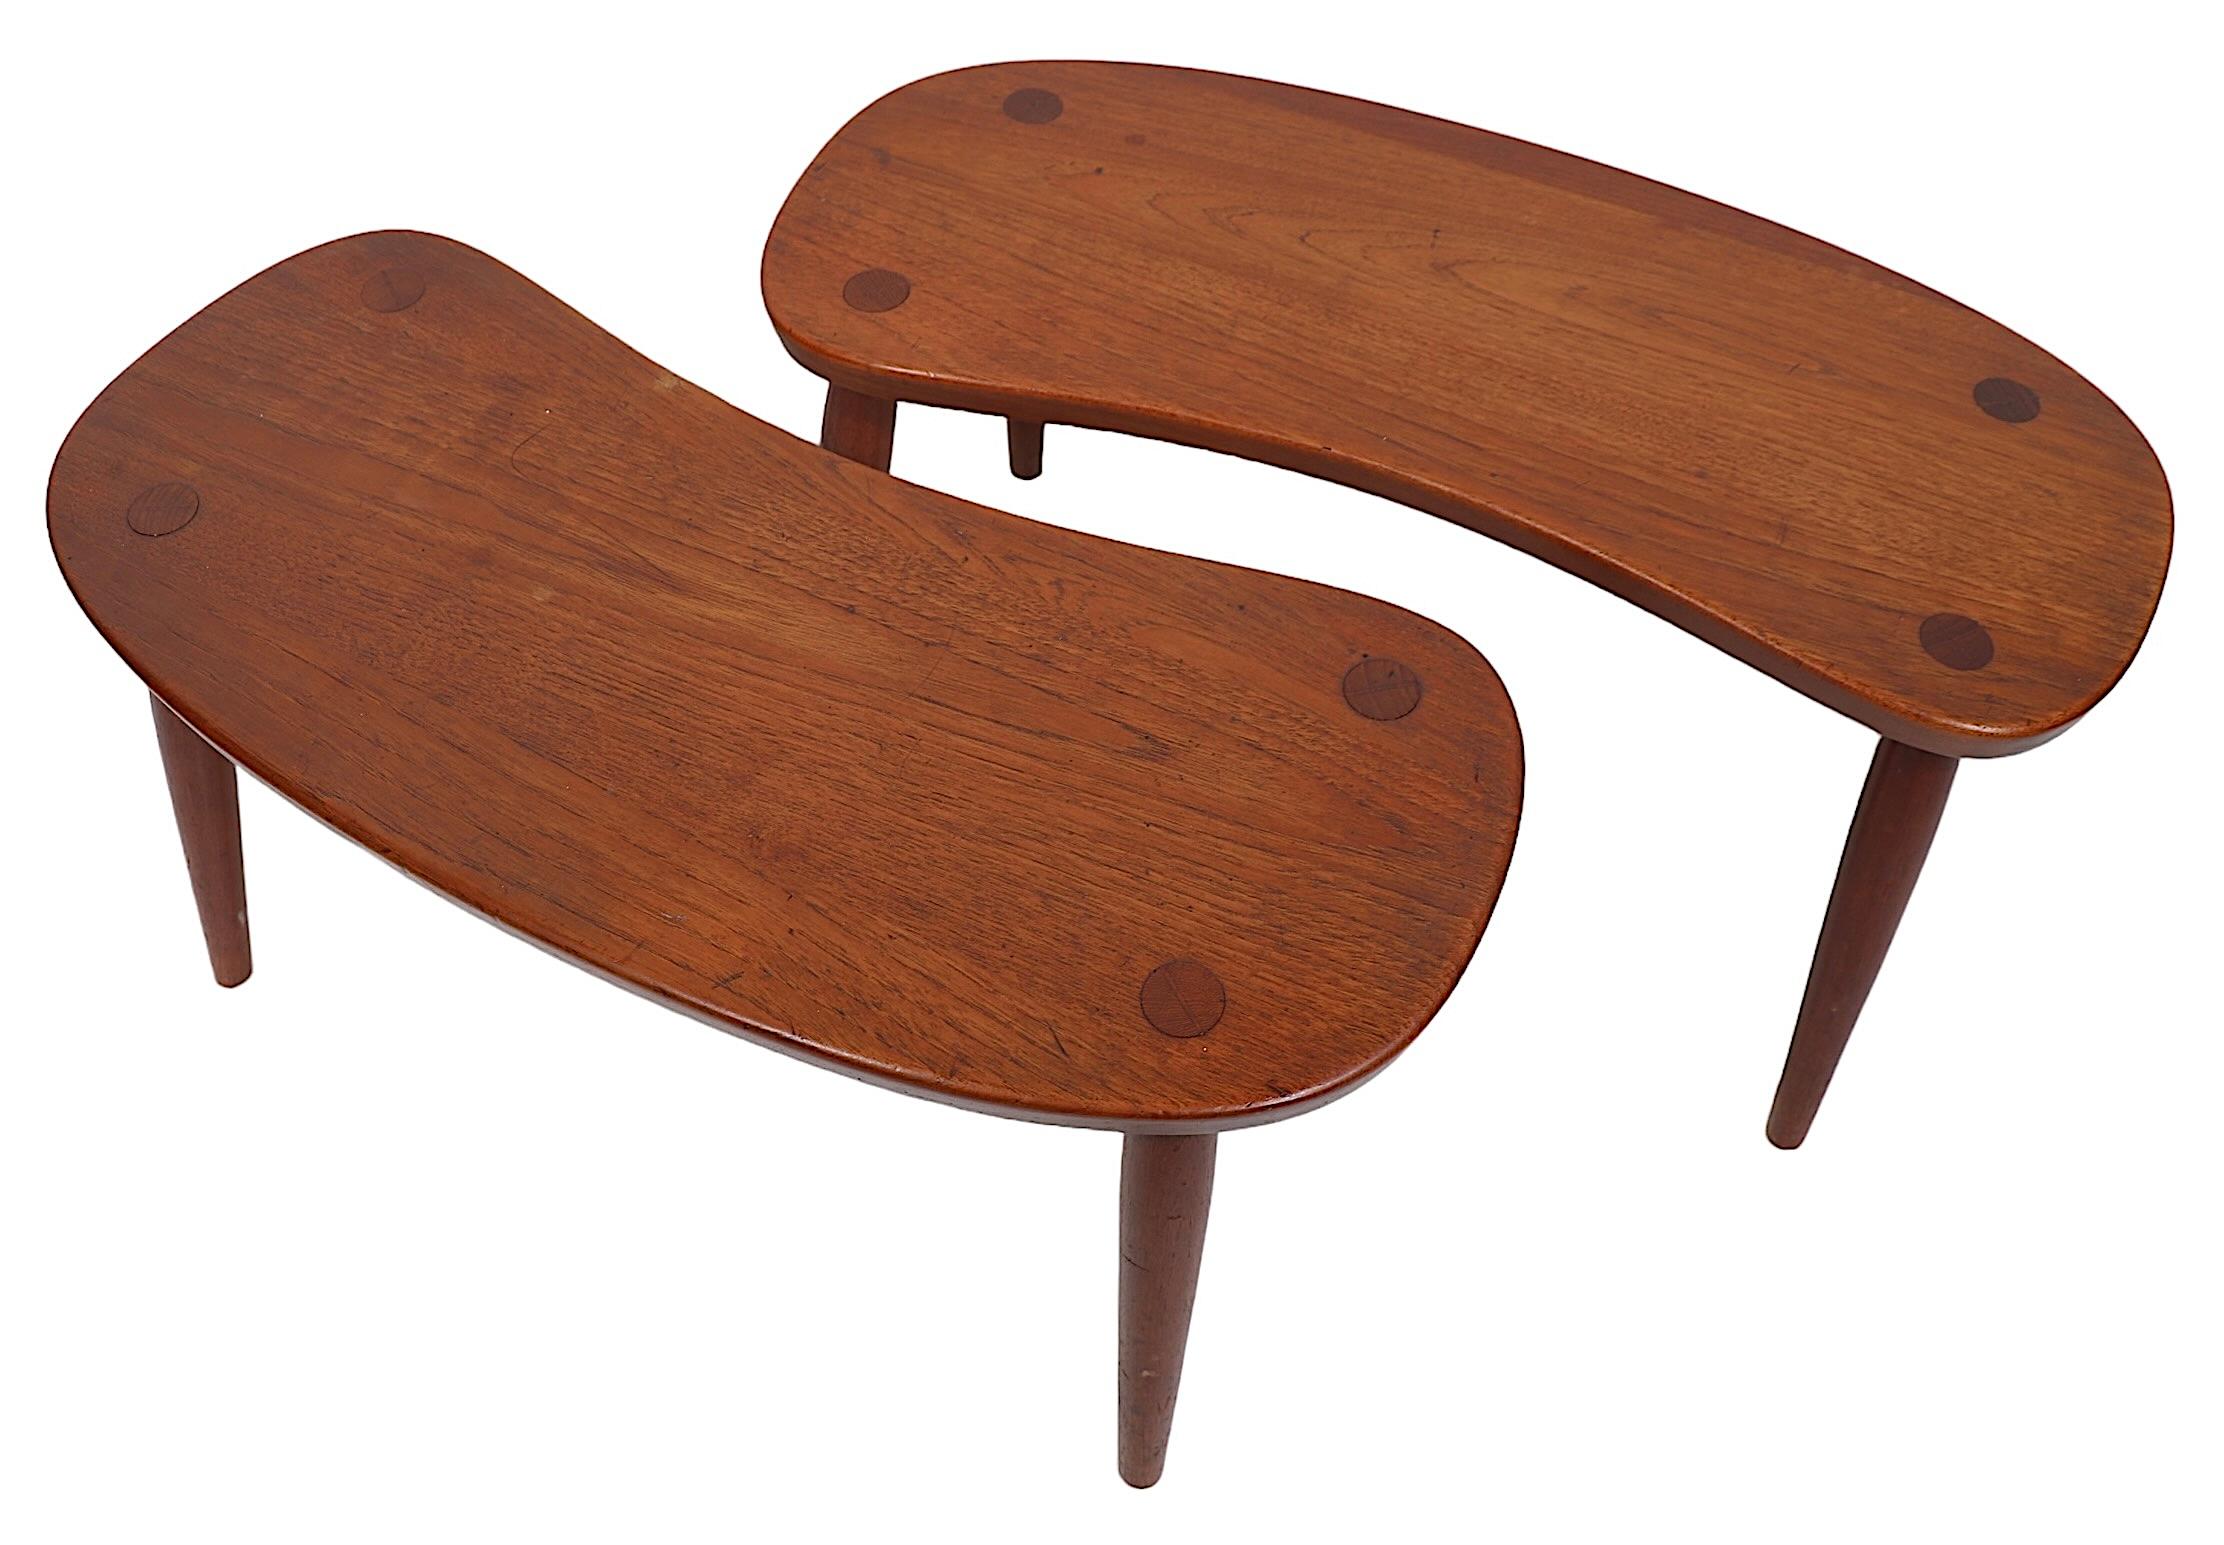 Teak Pr. Danish Mid Century Modern Tables Made by Illum Bolighus att. to Josef Frank  For Sale